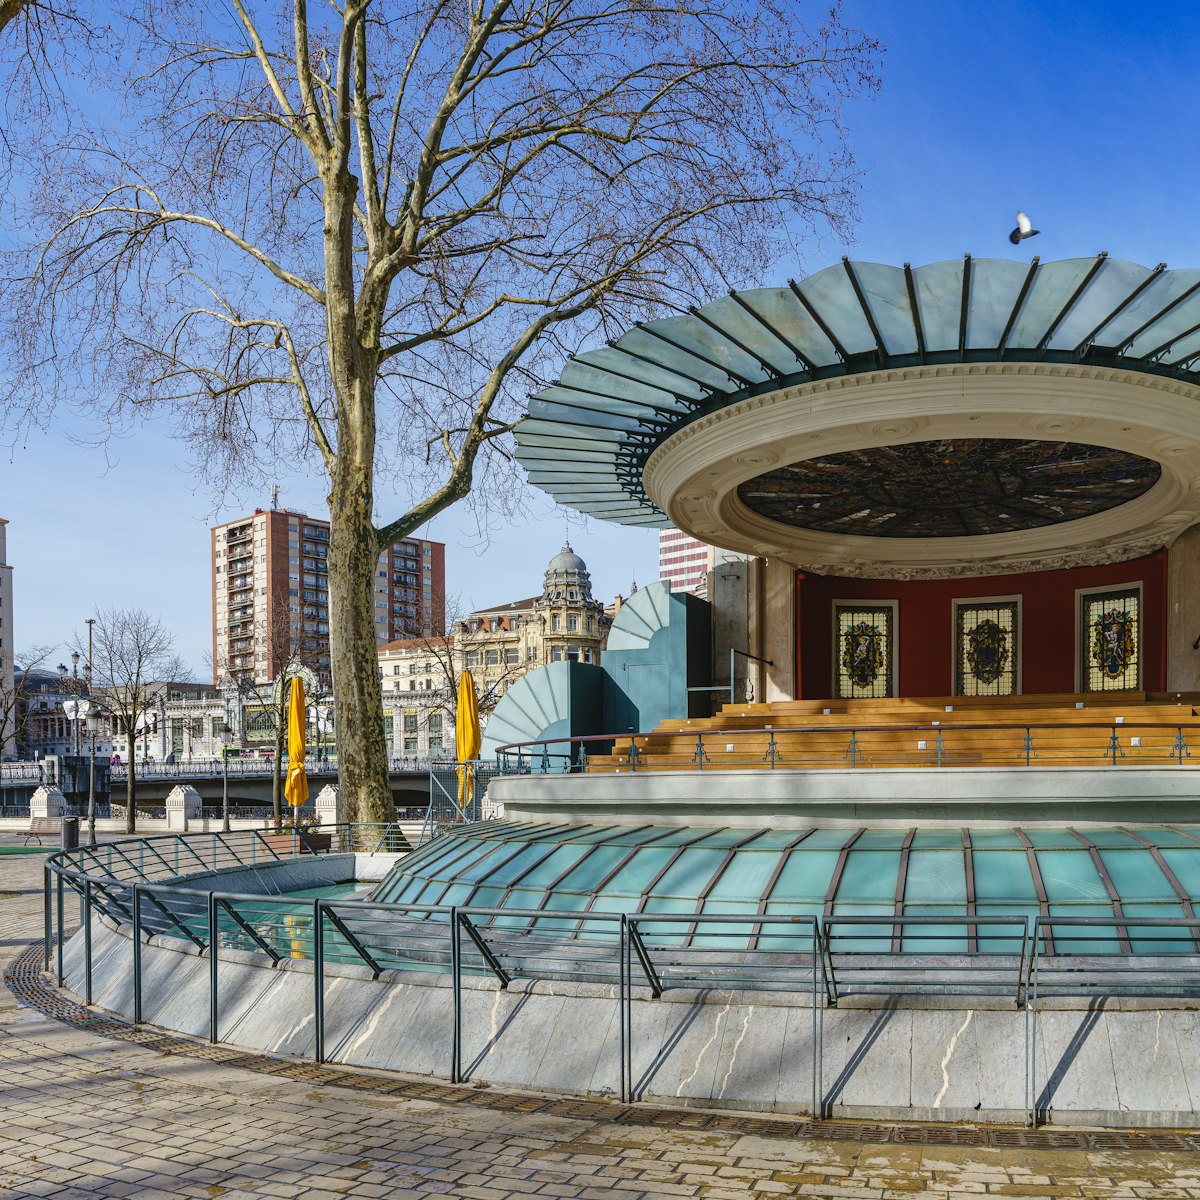 Spain, Bilbao, circular bandstand by the architect of Bermeo Pedro Ispizua in Plaza del Arenal.